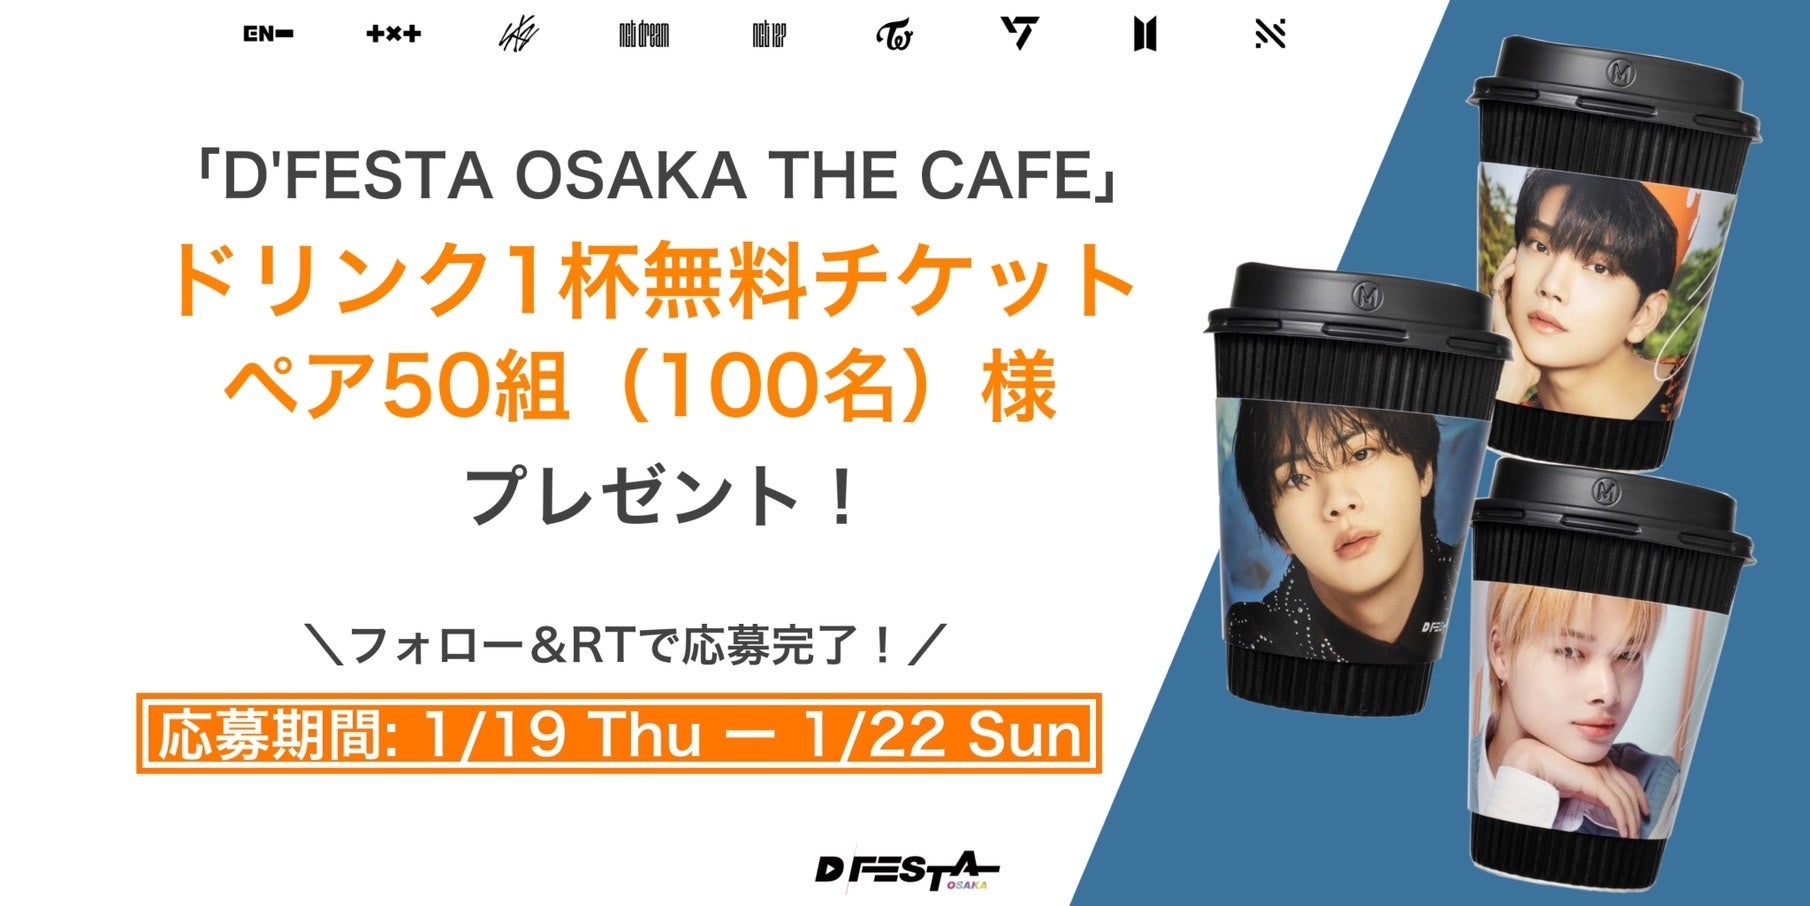 BTS・SEVENTEENなど9グループが参加した「D'FESTA OSAKA 」内のカフェに新メニュー・ココアが登場！ 大盛況を記念した「ドリンクチケットプレゼントキャンペーン」も開催中！のサブ画像4